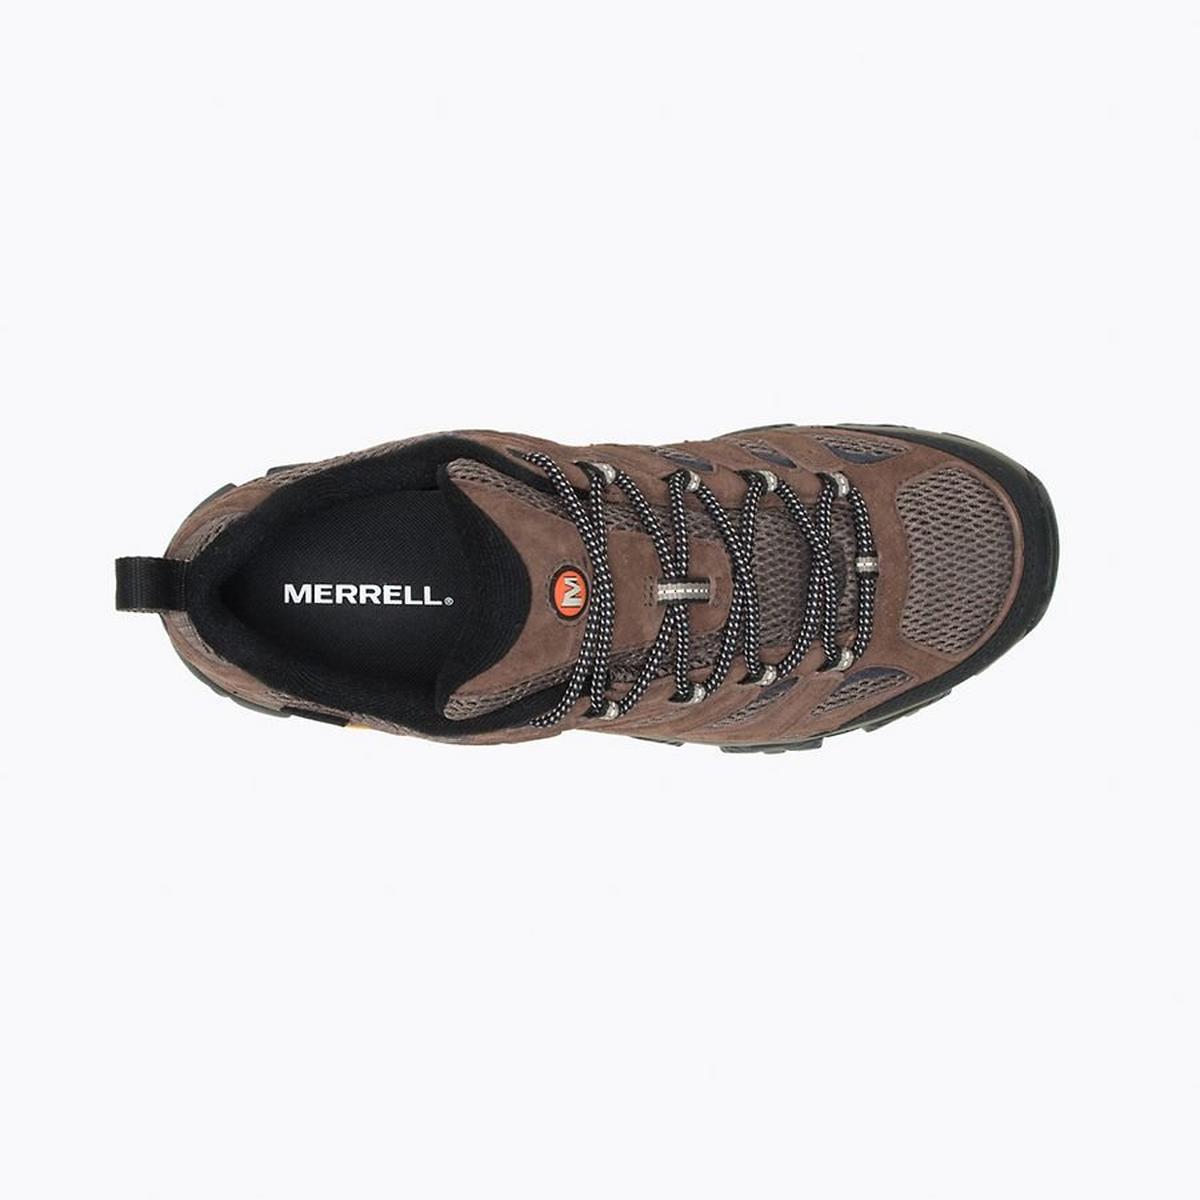 Merrell Men's Moab 3 GORE-TEX Walking Shoes - Bracken